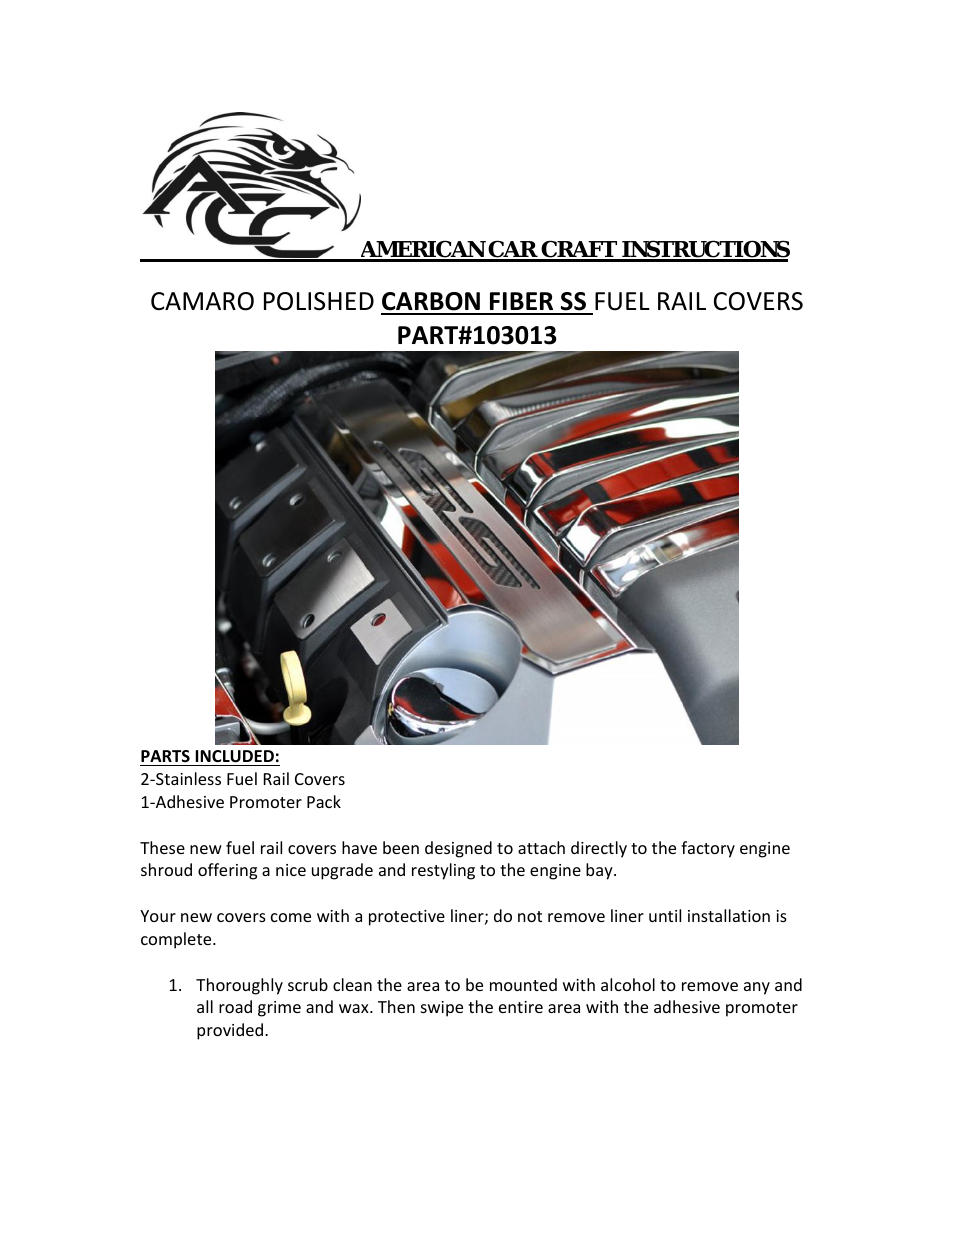 Camaro Fuel Rail Covers Polished Carbon Fiber "SS 2010-2013"